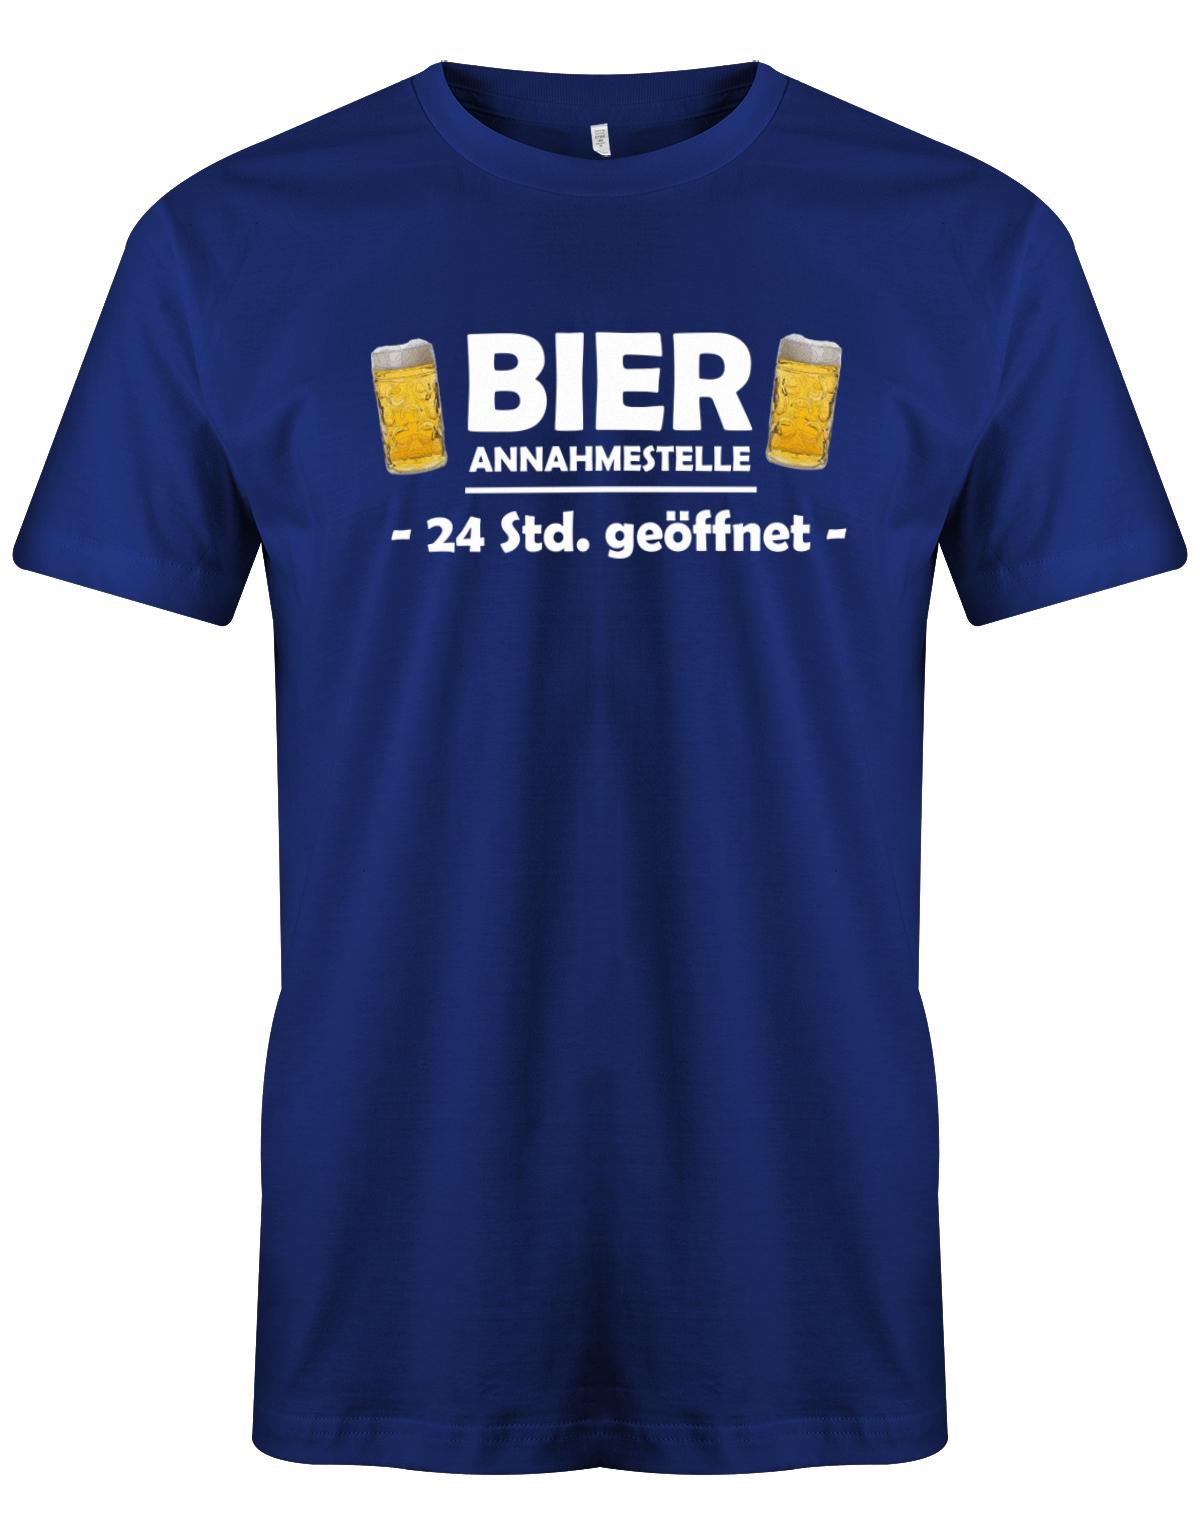 Bier-Annahmestelle-Herren-Shirt-Royalblau